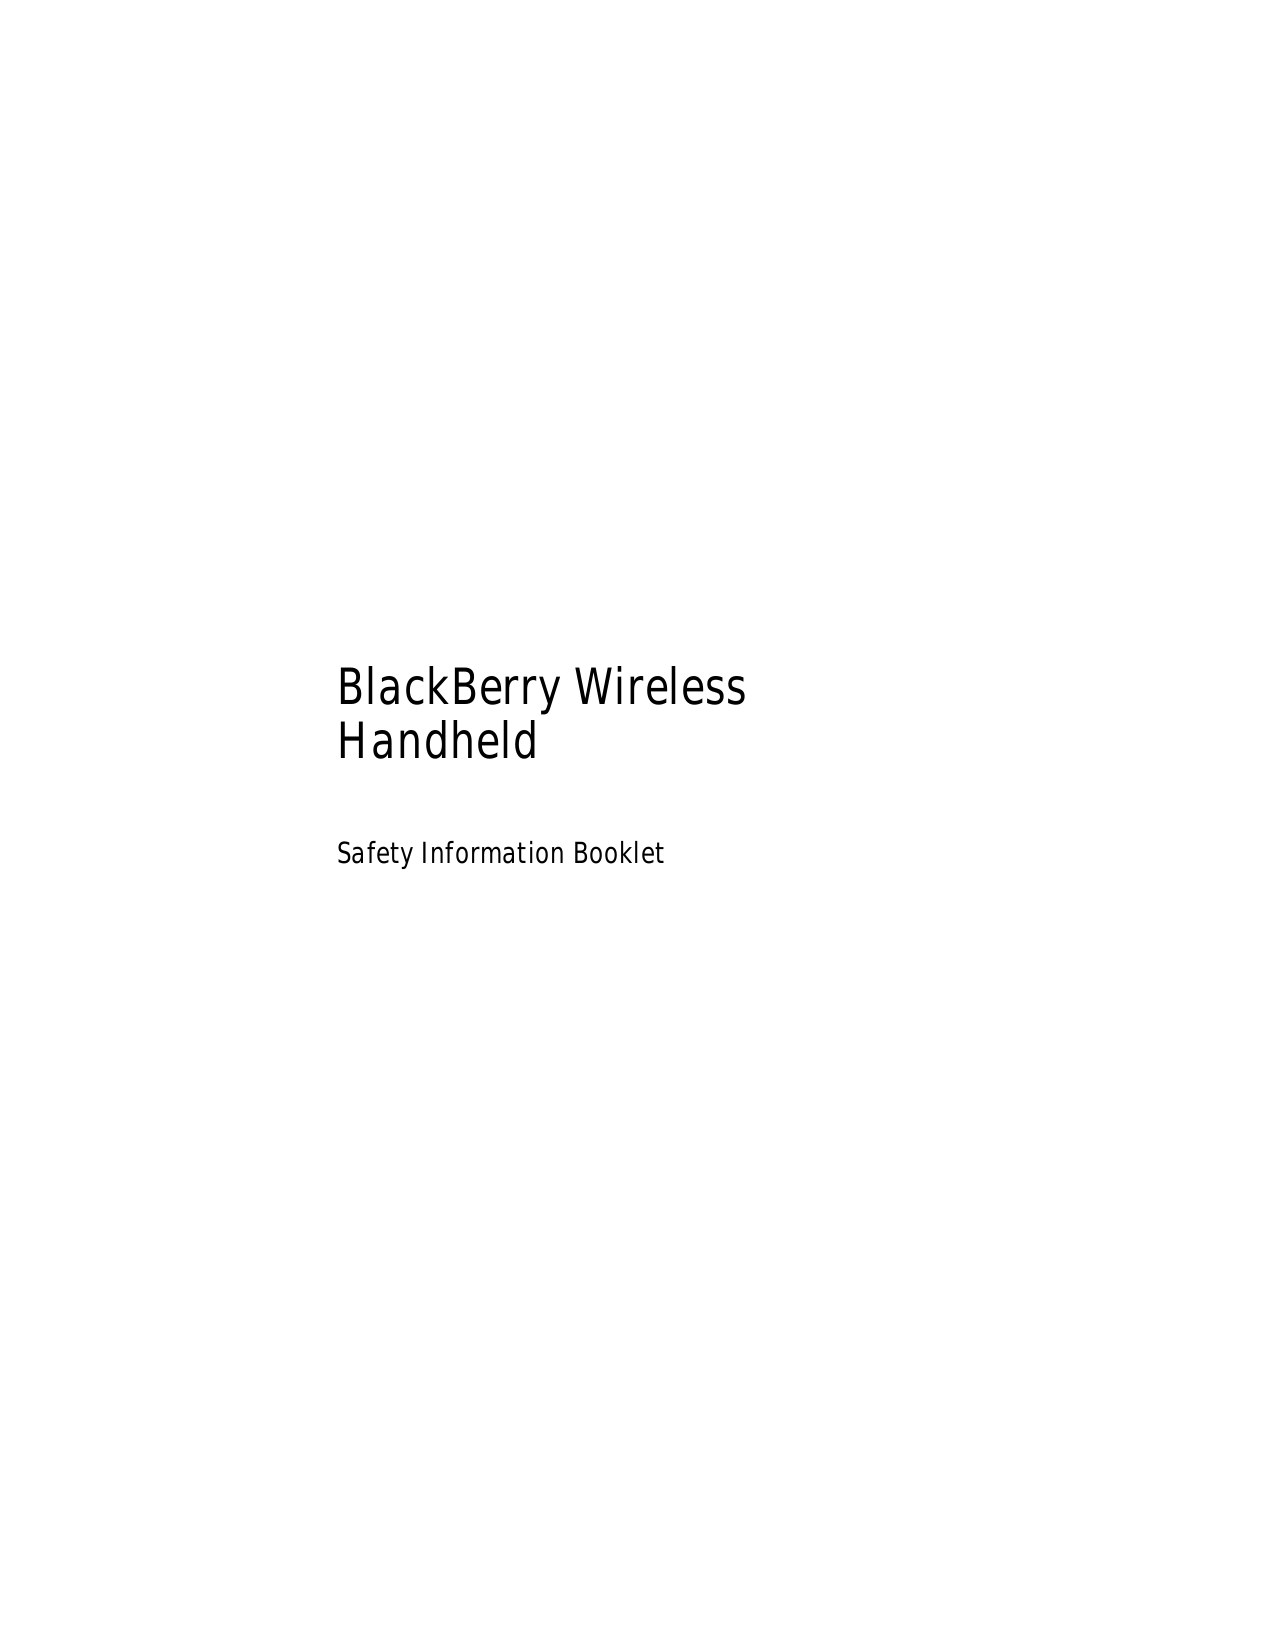 BlackBerry Wireless HandheldSafety Information Booklet